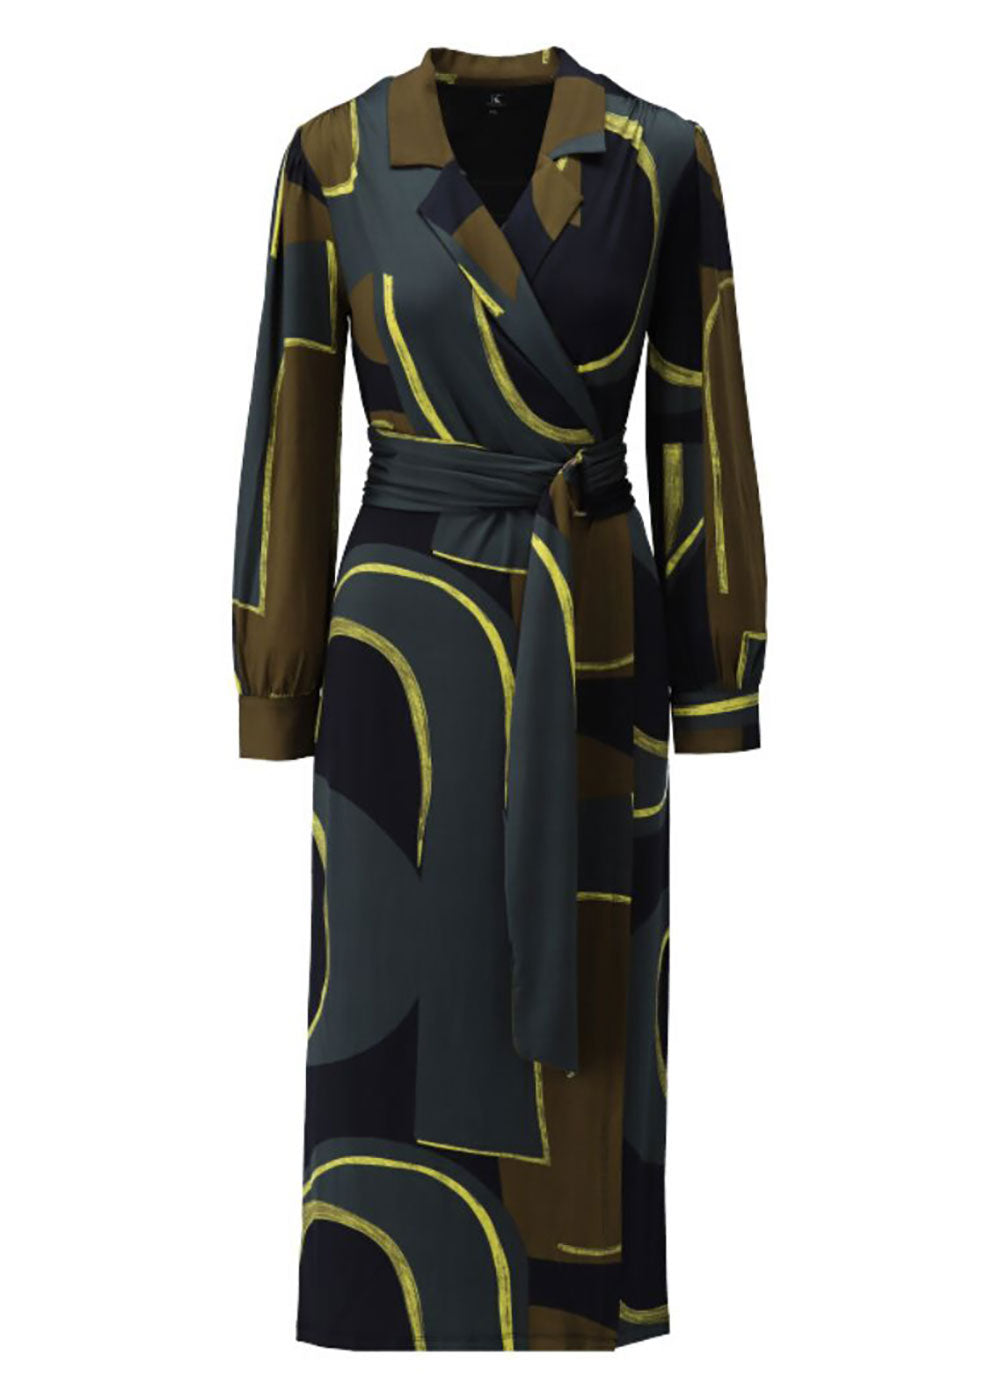 Retro Geometric Print Dress - X141